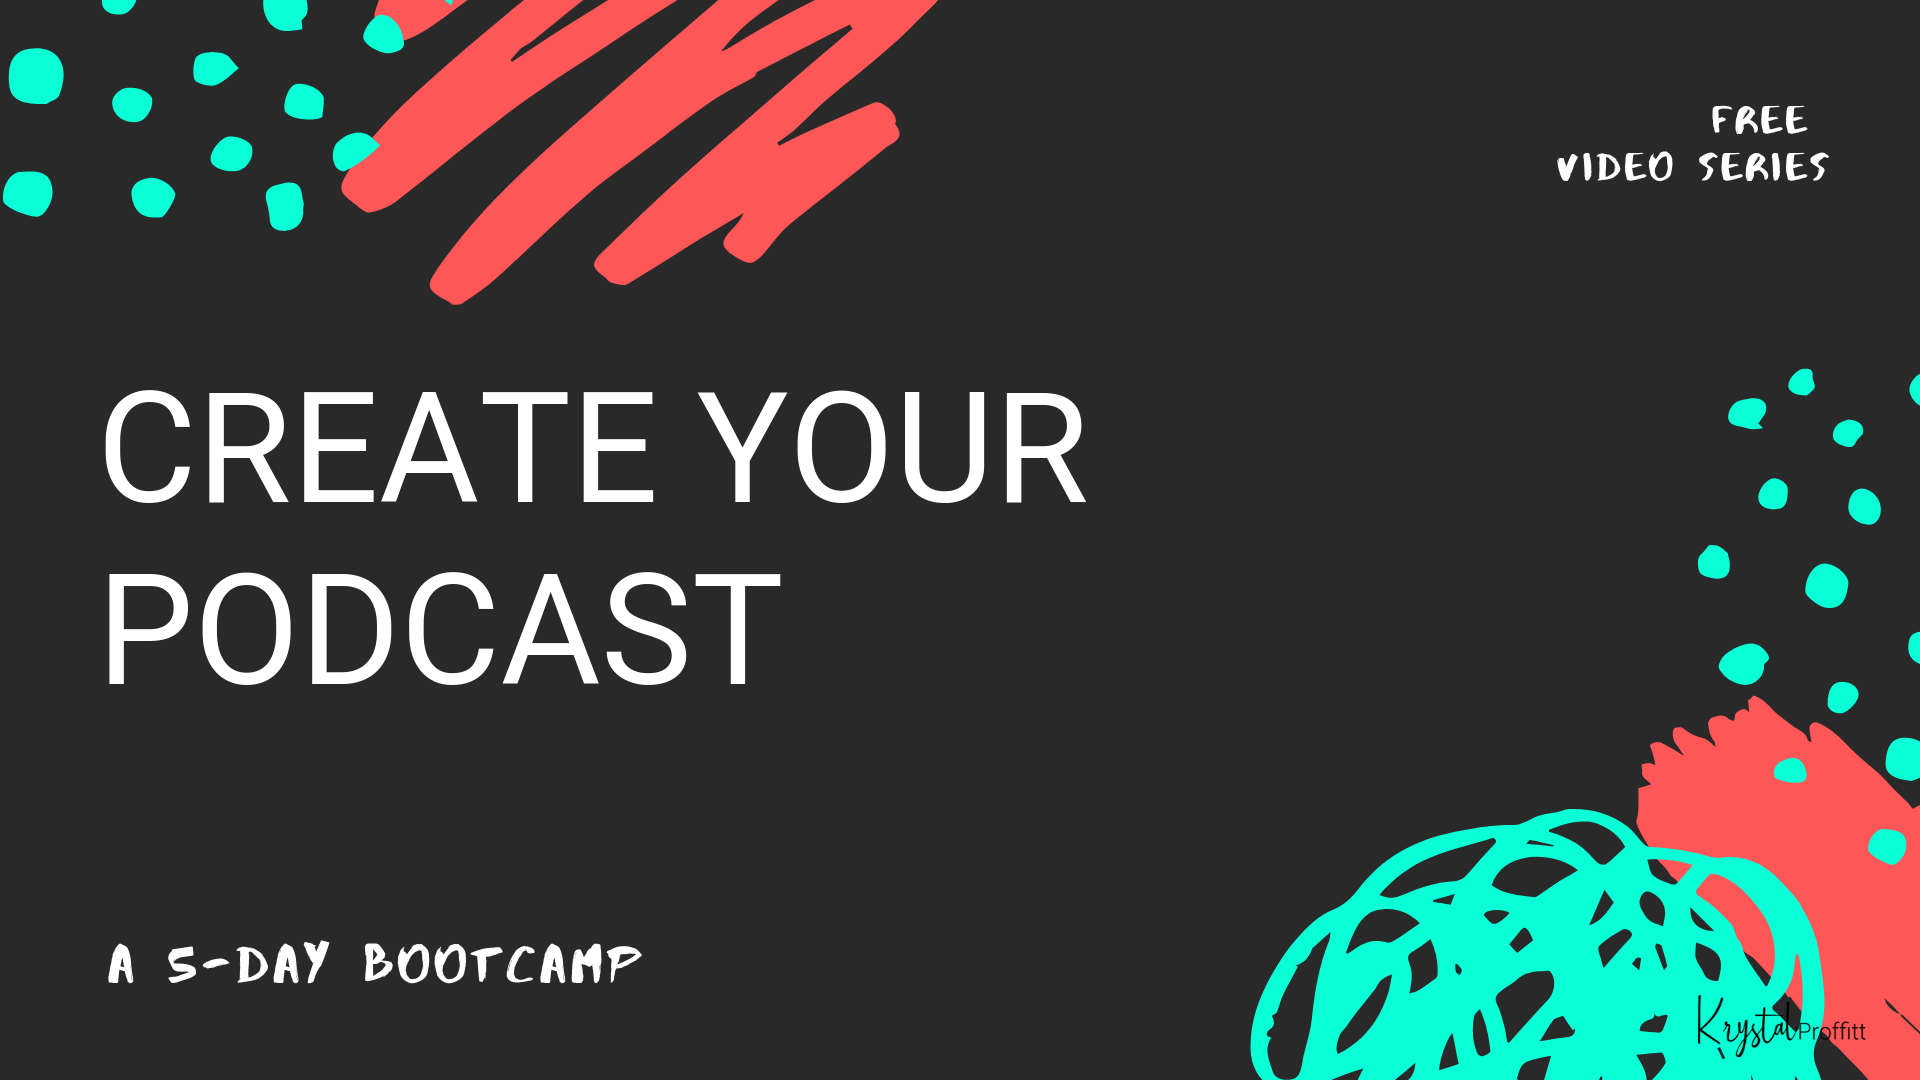 5-Day Podcast Bootcamp - Krystal Proffitt